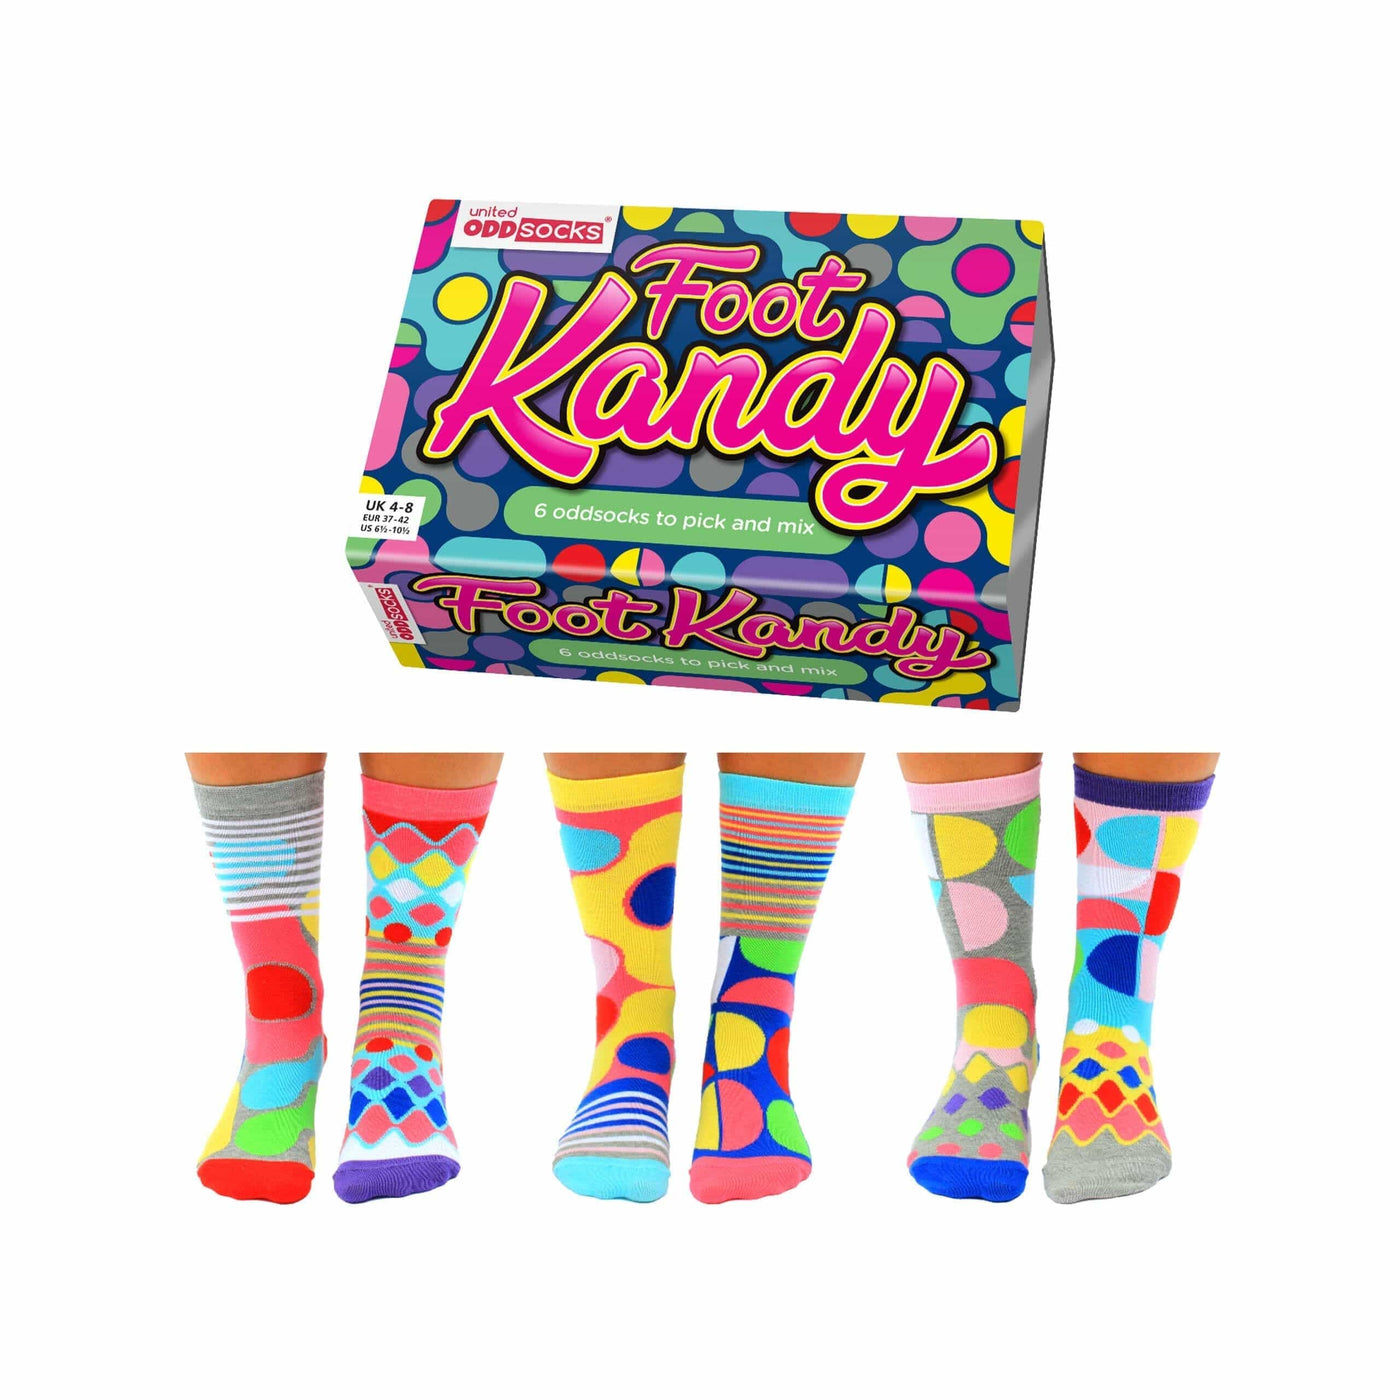 United Odd Socks Socks Foot Kandy Set of 6 Women's Oddsocks